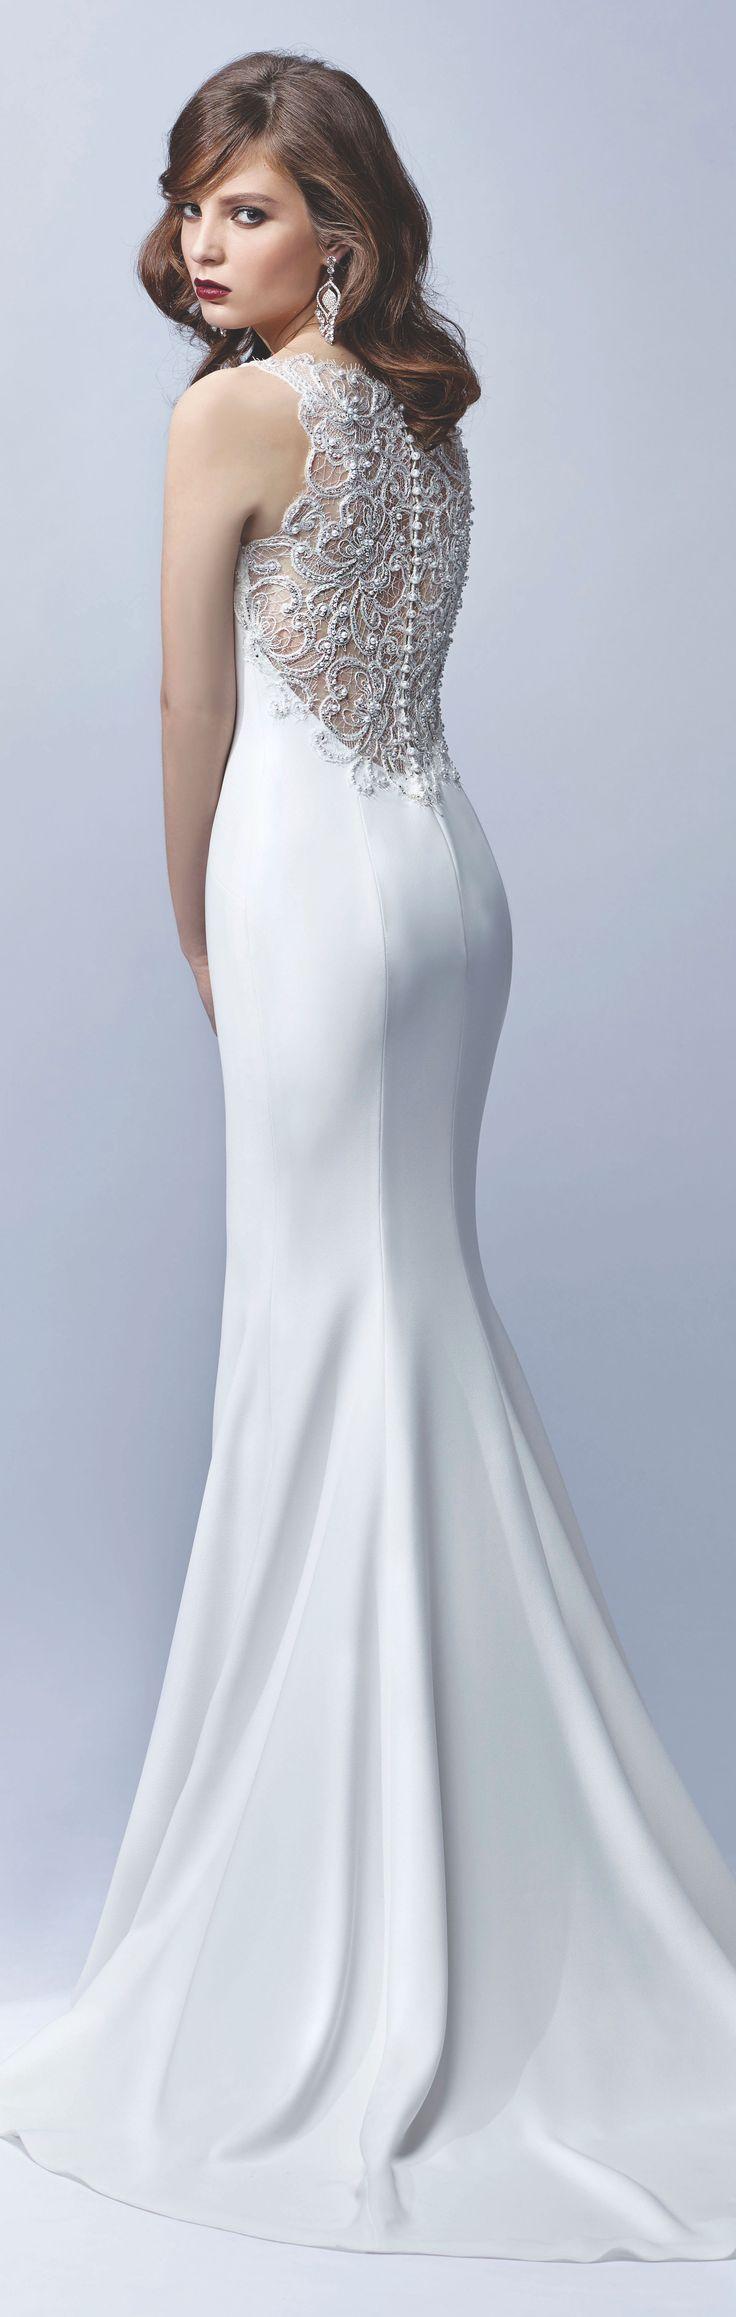 زفاف - Wedding Dresses & Bridal Gowns Summer/Winter 2015 Collection UK - Enzoani